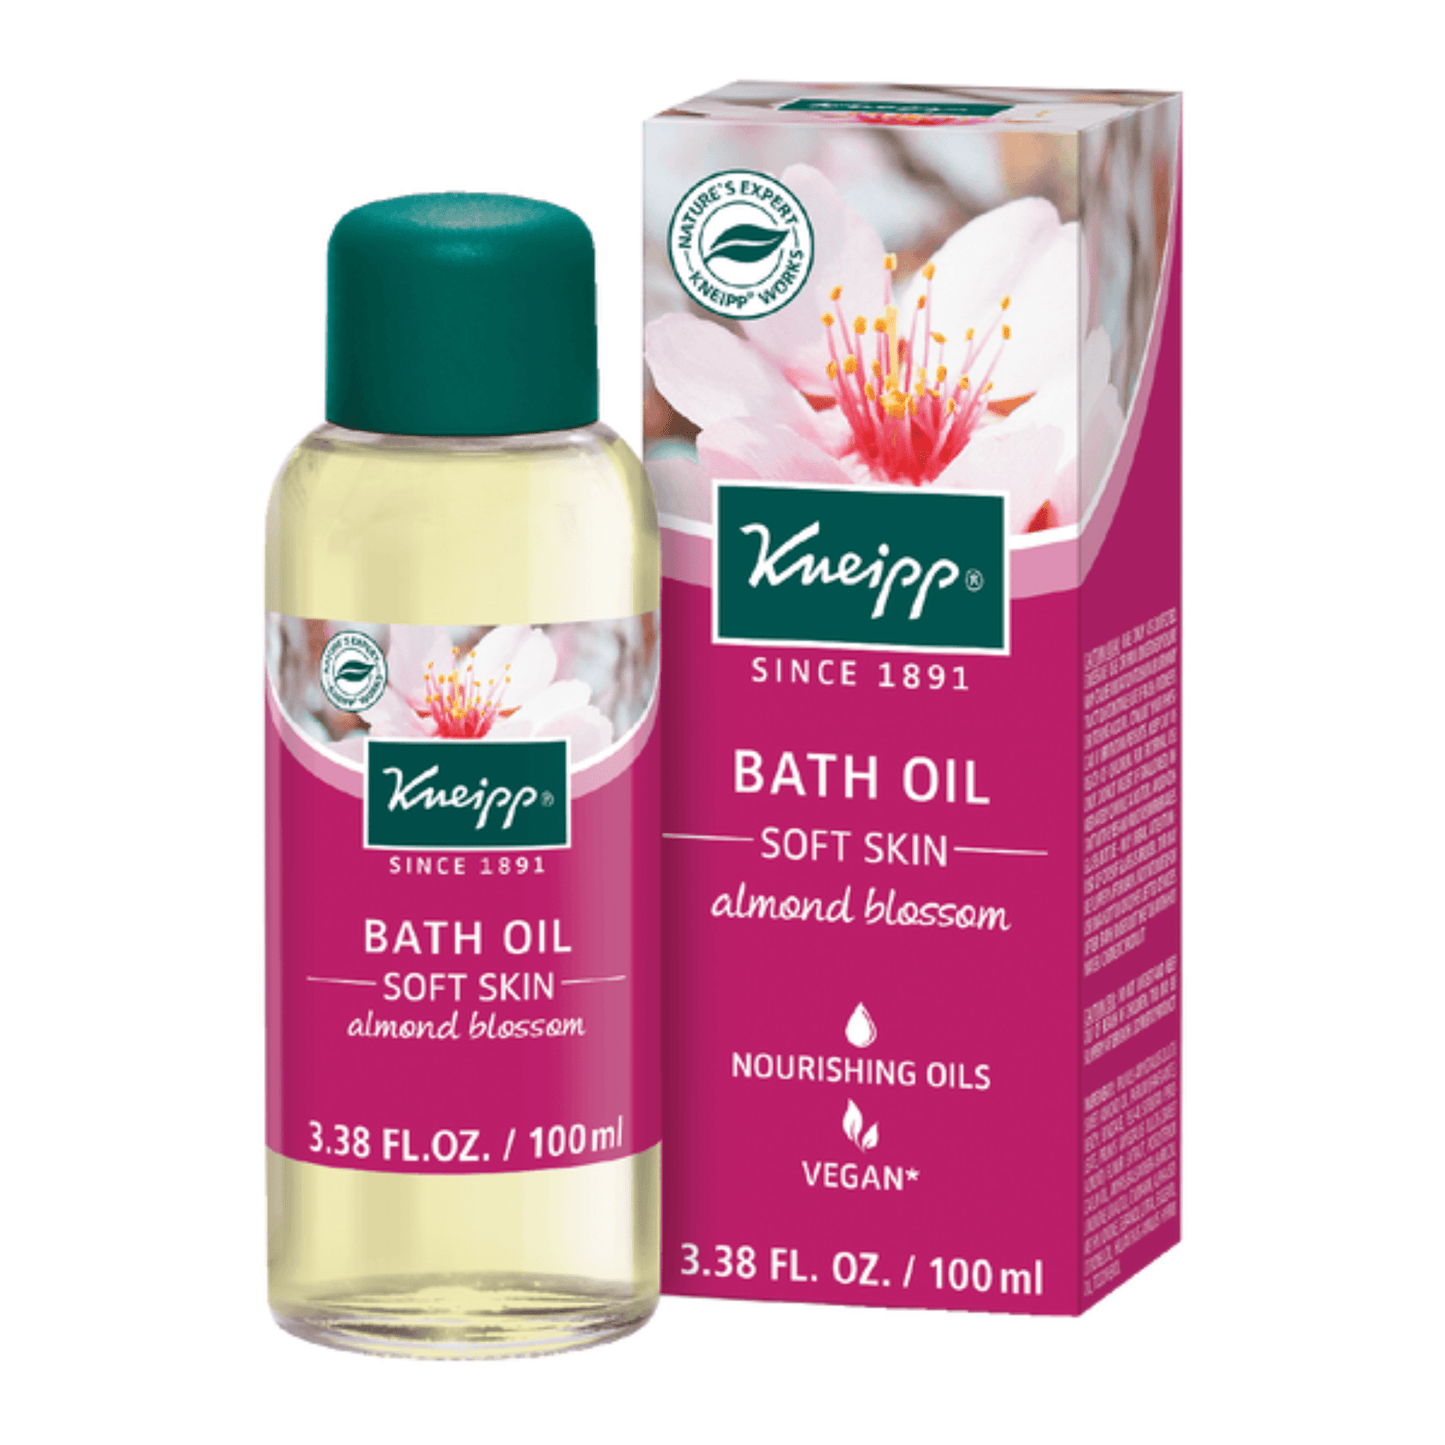 Primary Image of Almond Blossom Soft Skin Bath Oil